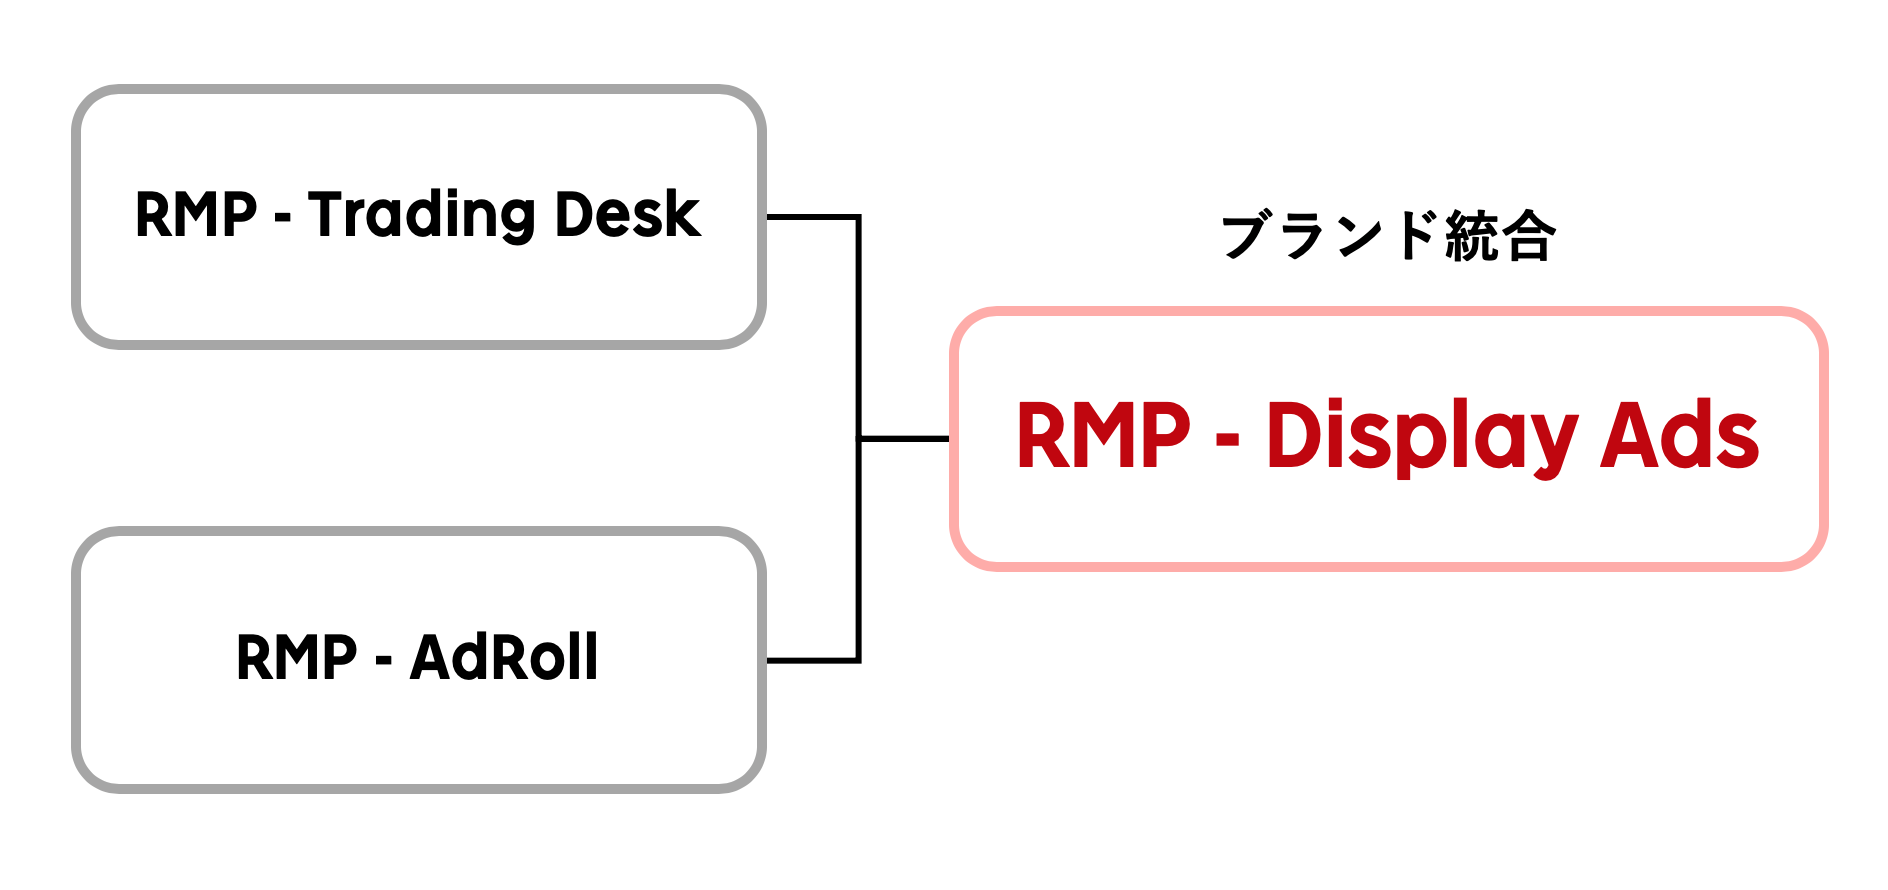 「RMP - Trading Desk」と「RMP - AdRoll」をブランド統合し、「RMP - Display Ads」へ